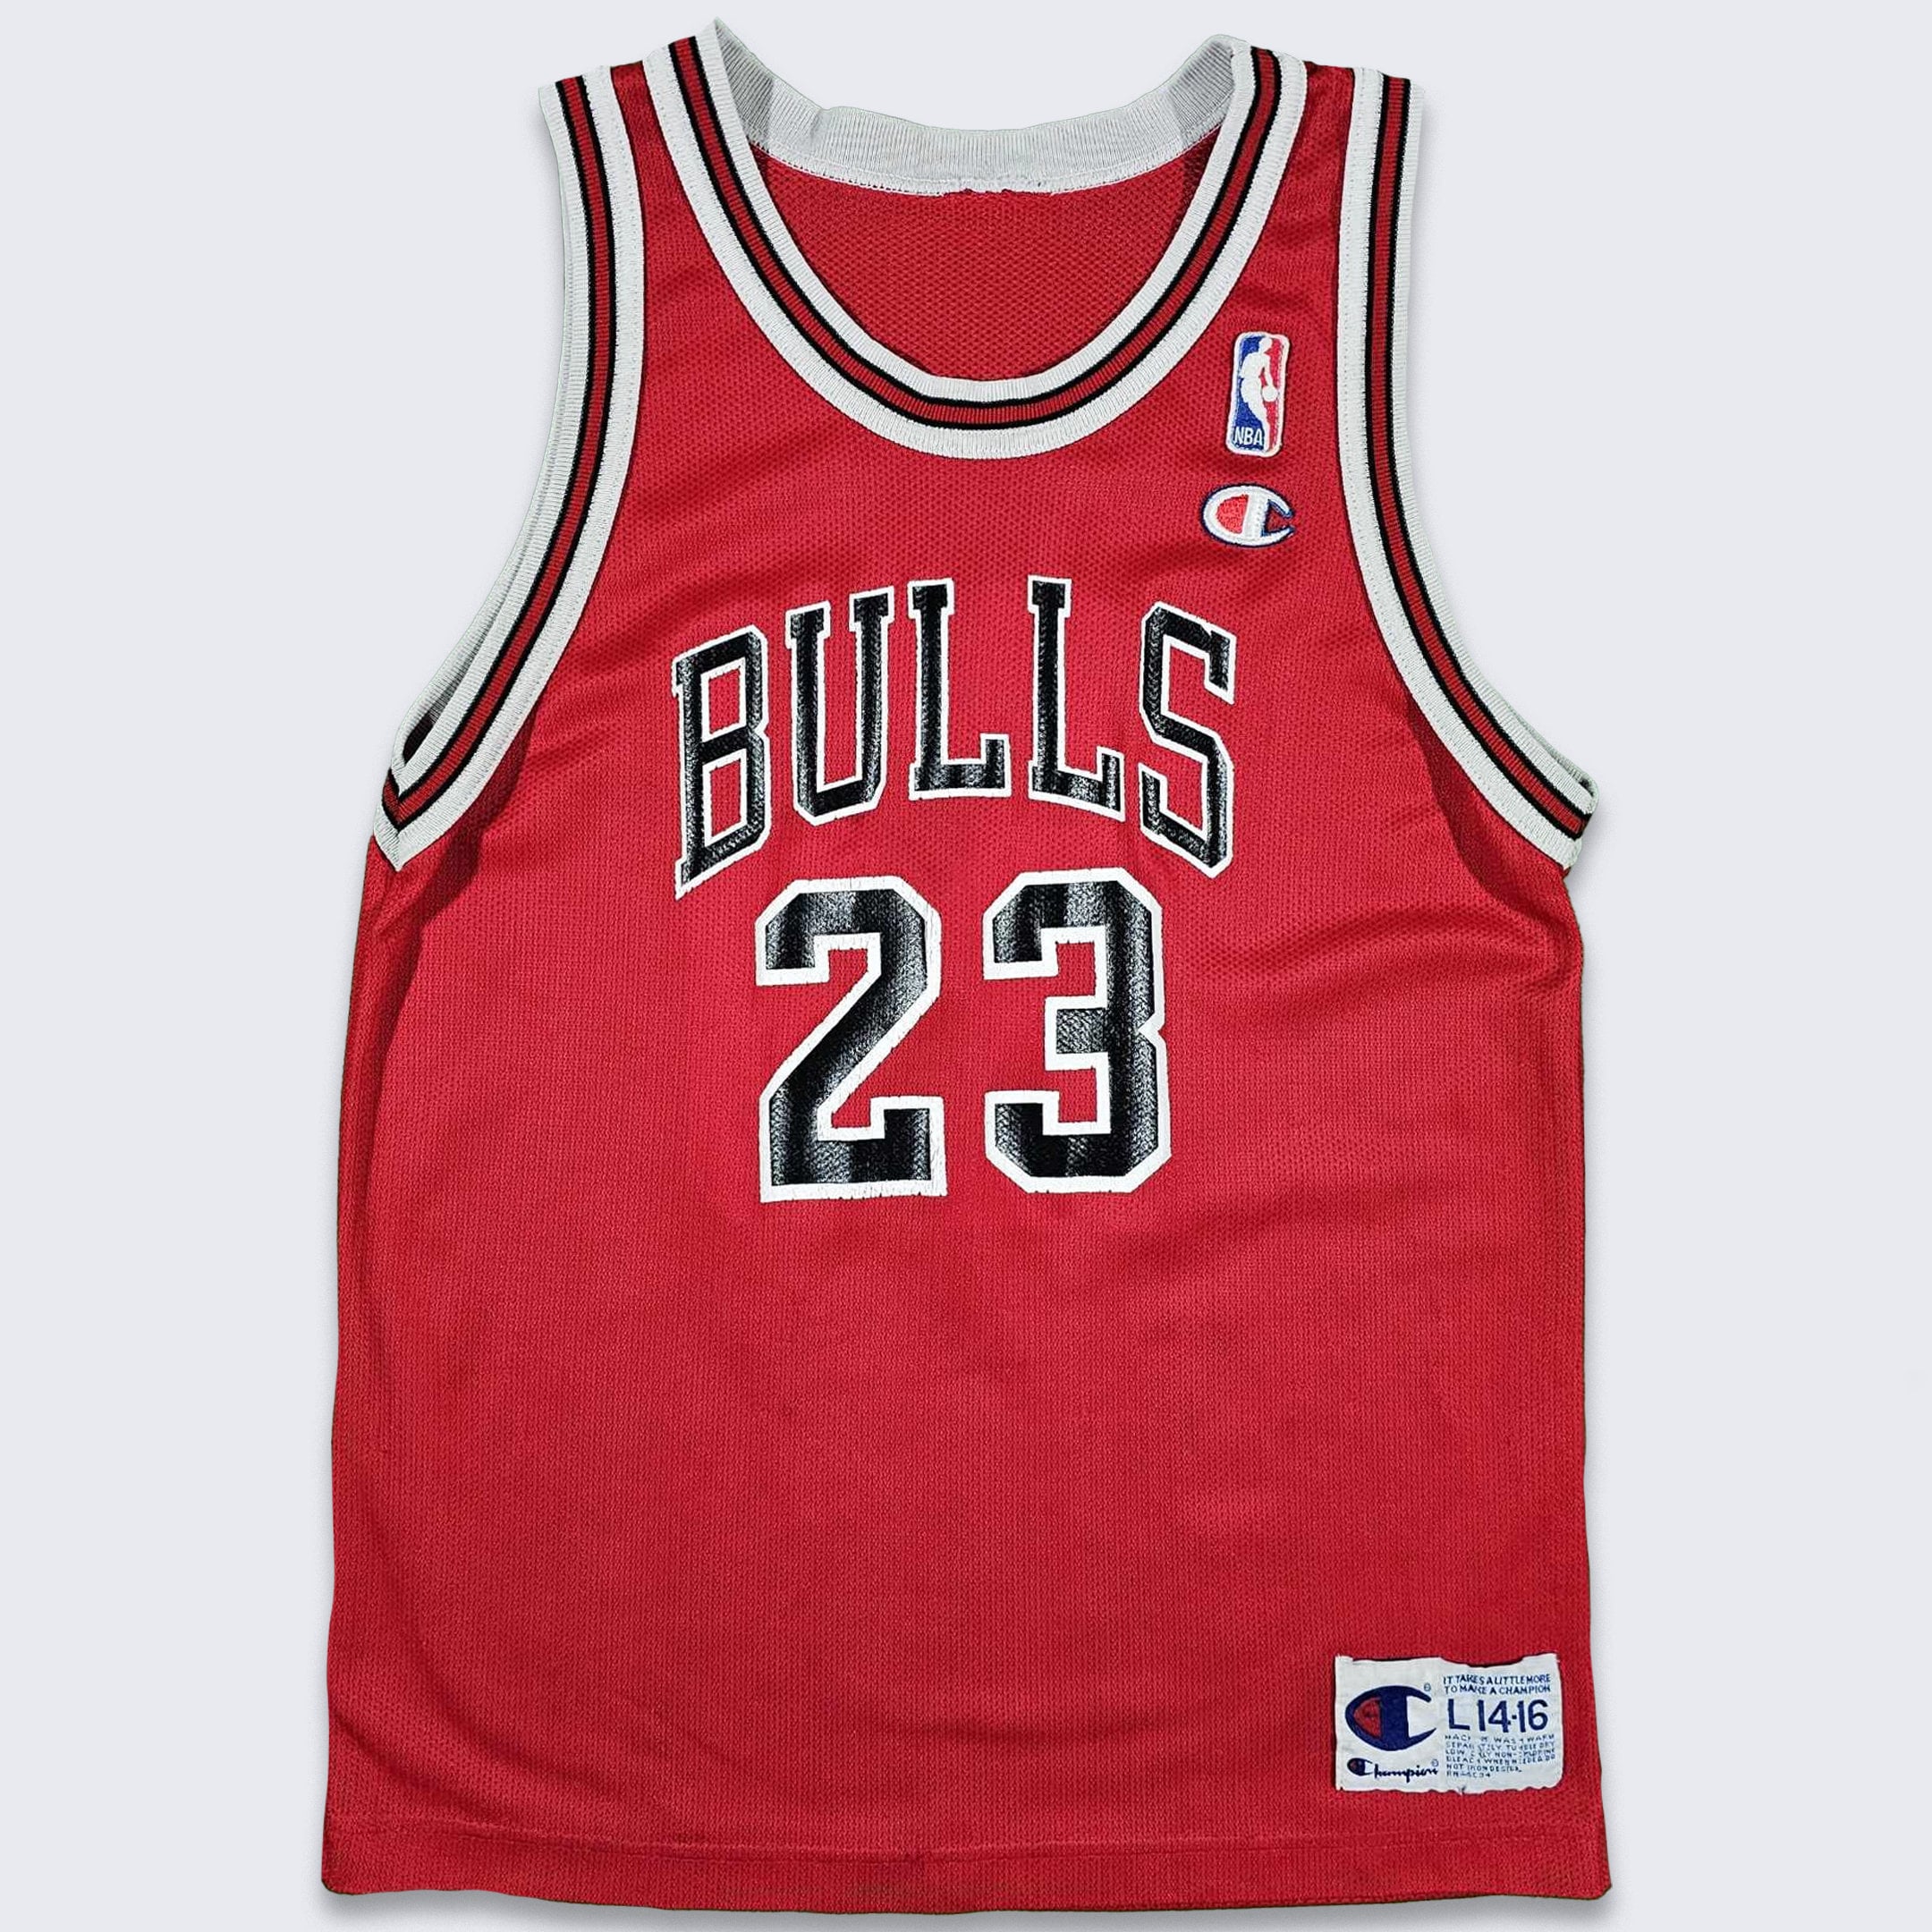 Michael Jordan Chicago Bulls Black 23 Jersey Size XL 48 Champion Reversible